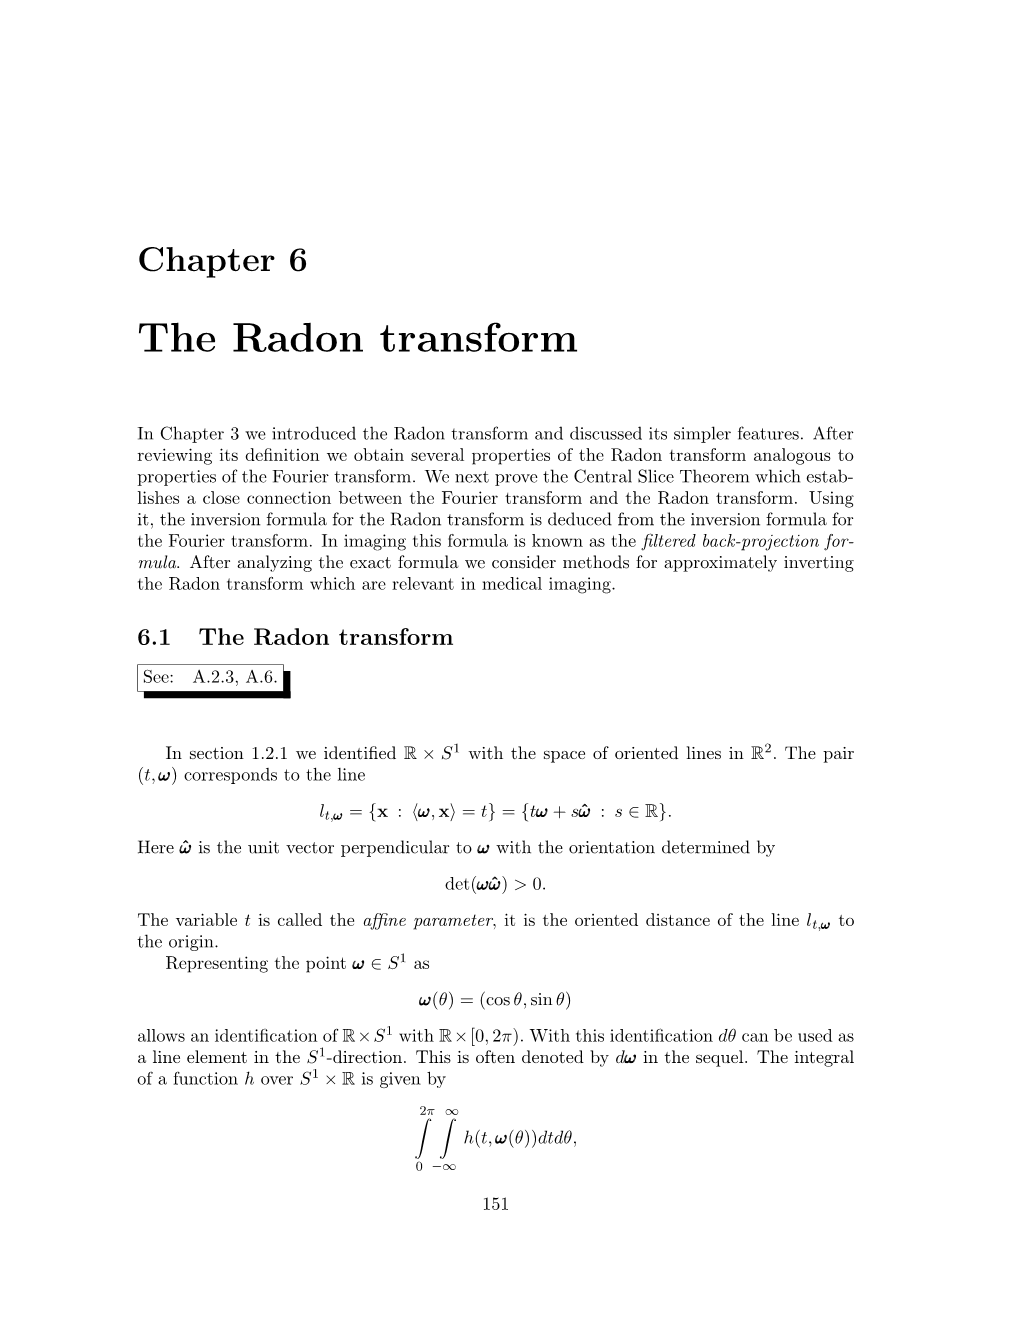 Chapter 6 the Radon Transform